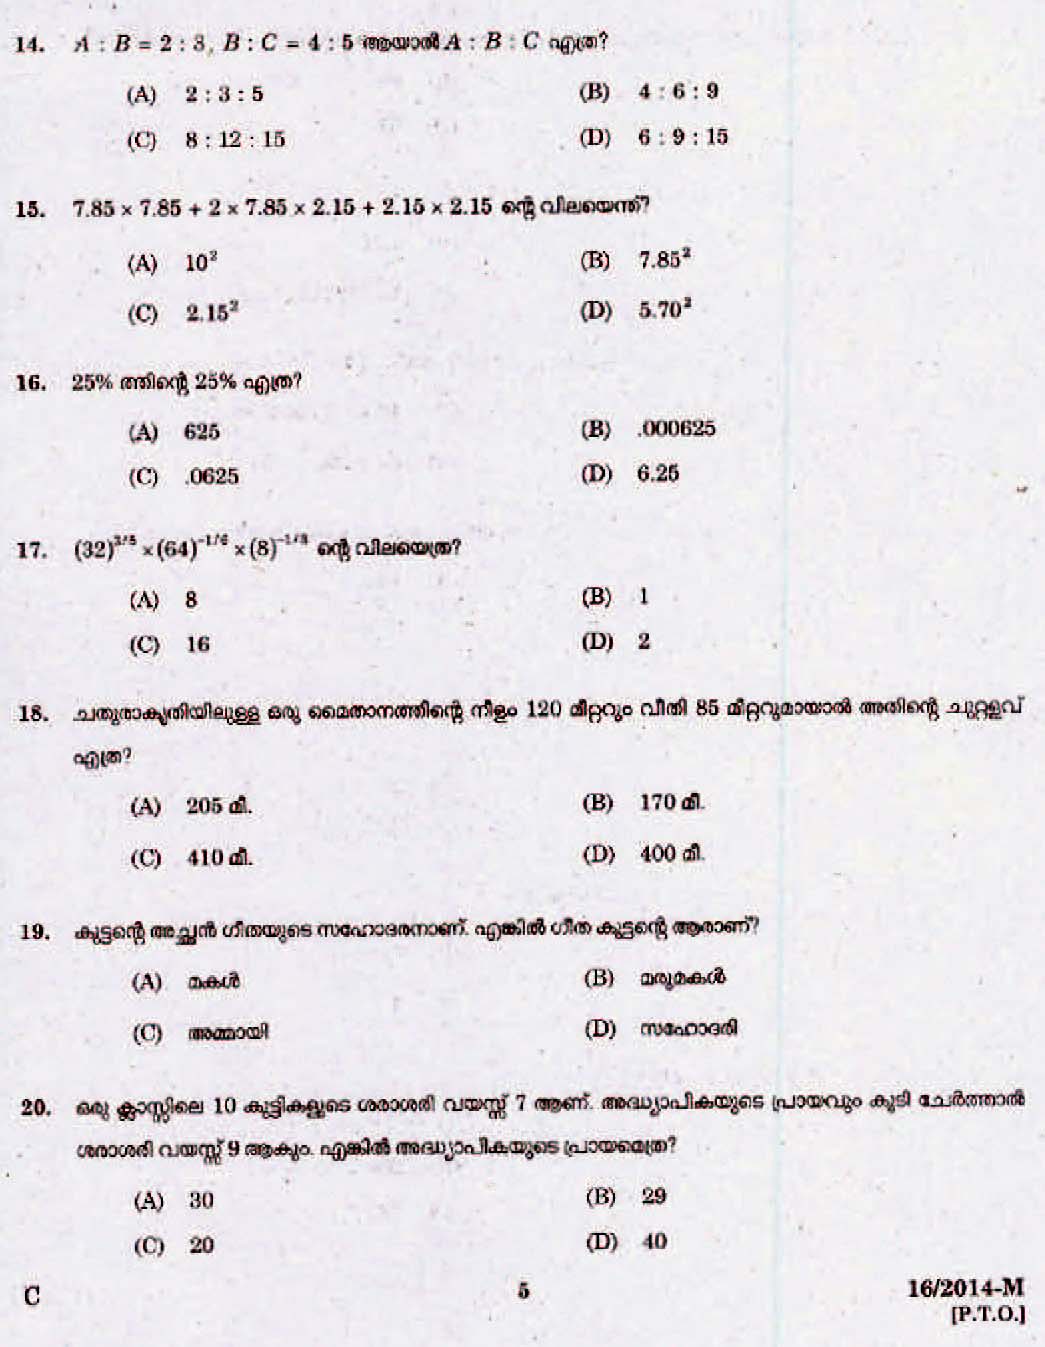 LD Clerk Kottayam Question Paper Malayalam 2014 Paper Code 162014 M 4